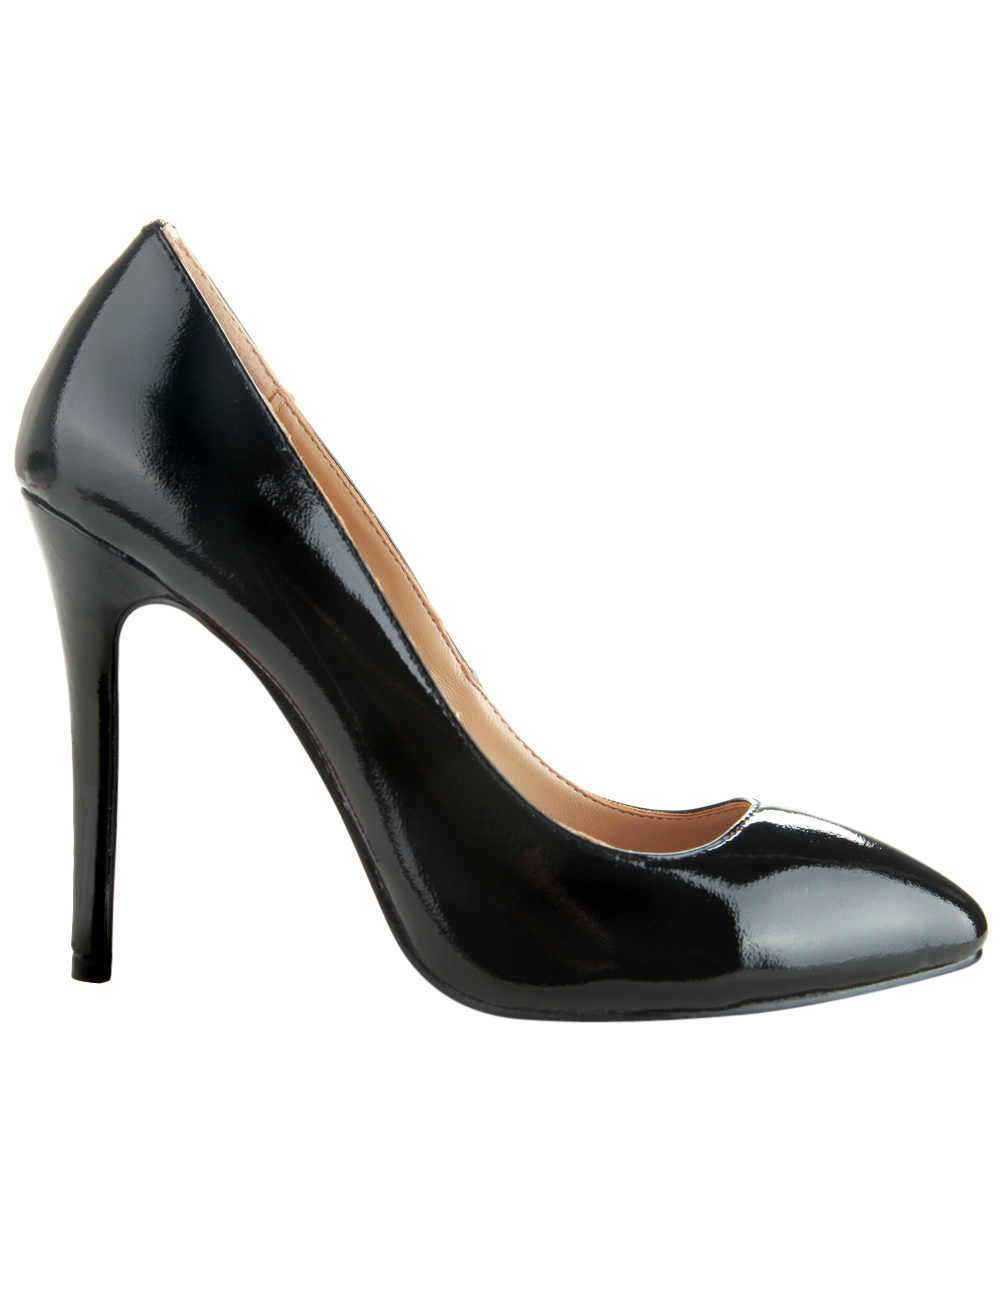 4 3/4'' High Heel Black Patent Sexy Pumps - Milanoo.com